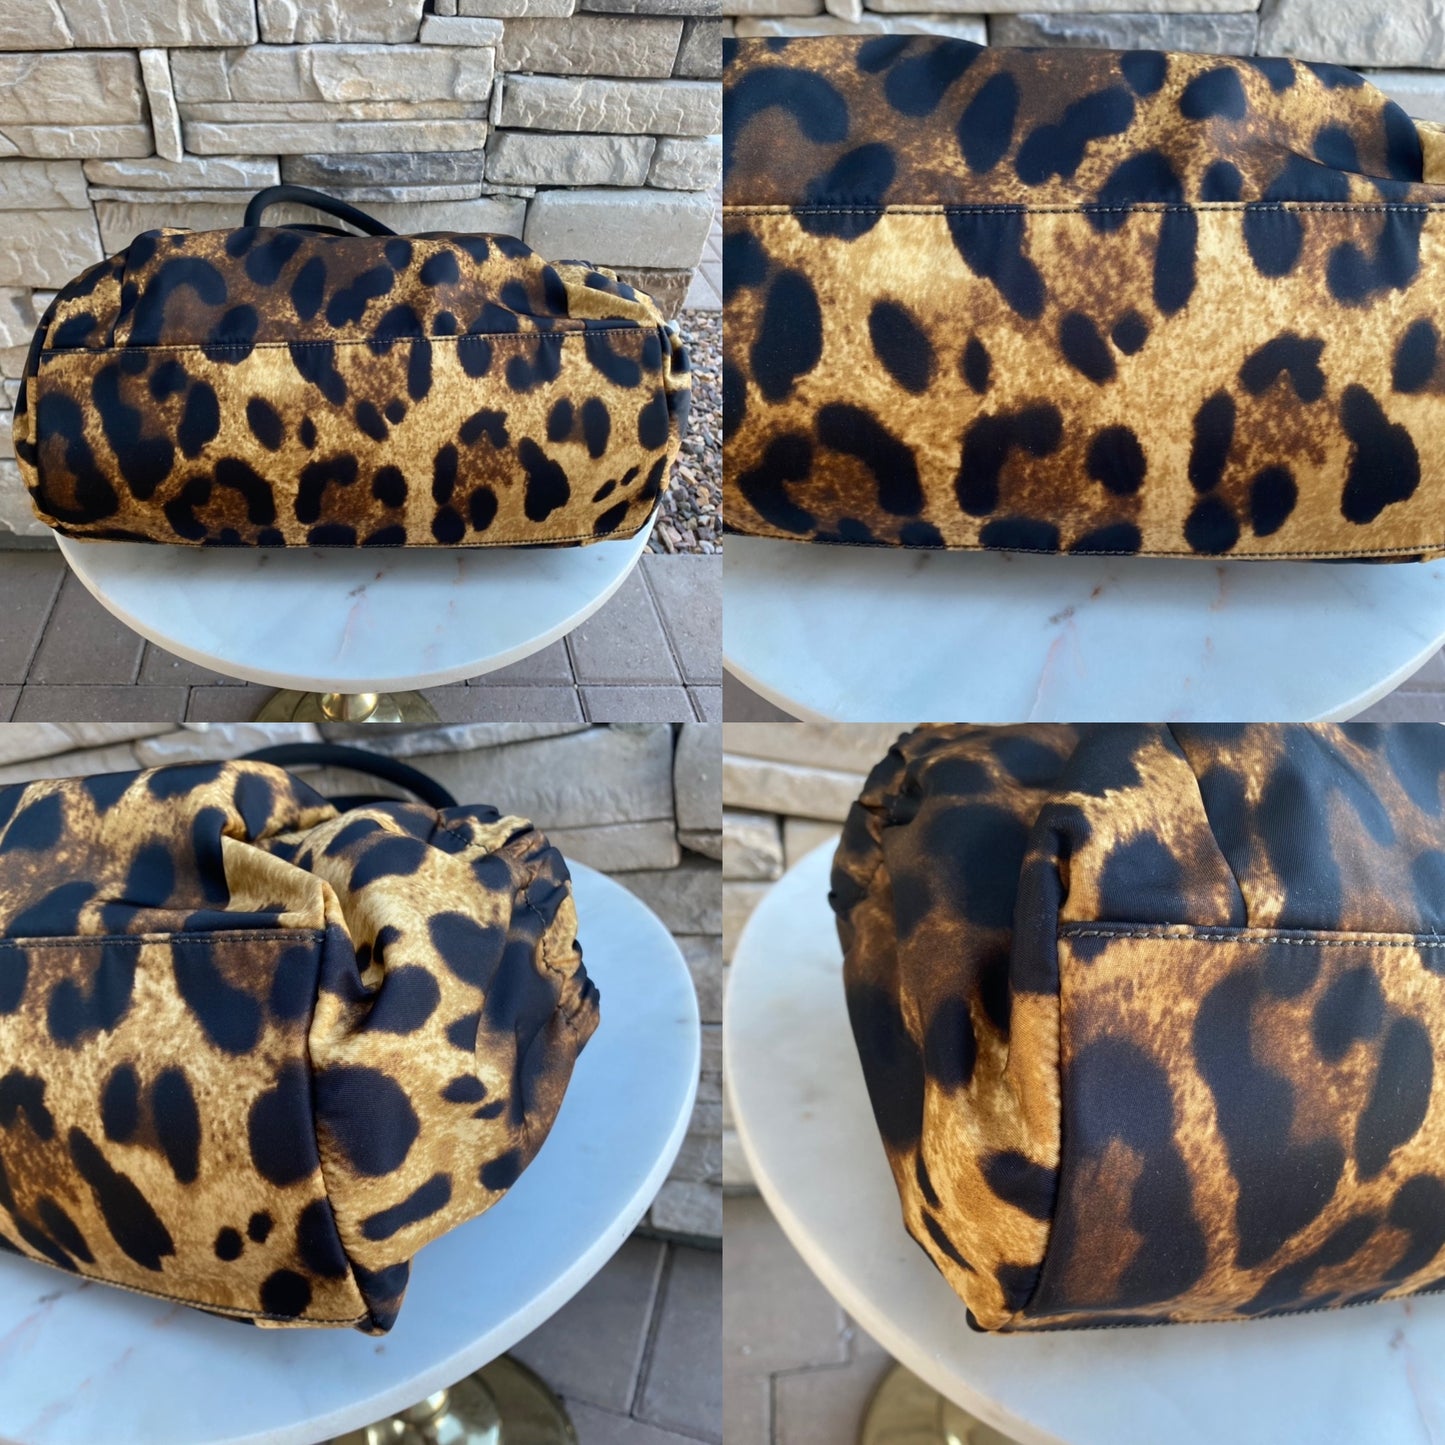 Salvatore Ferragamo Nylon Grosgrain Trim Vara Bow Leopard Shoulder Bag